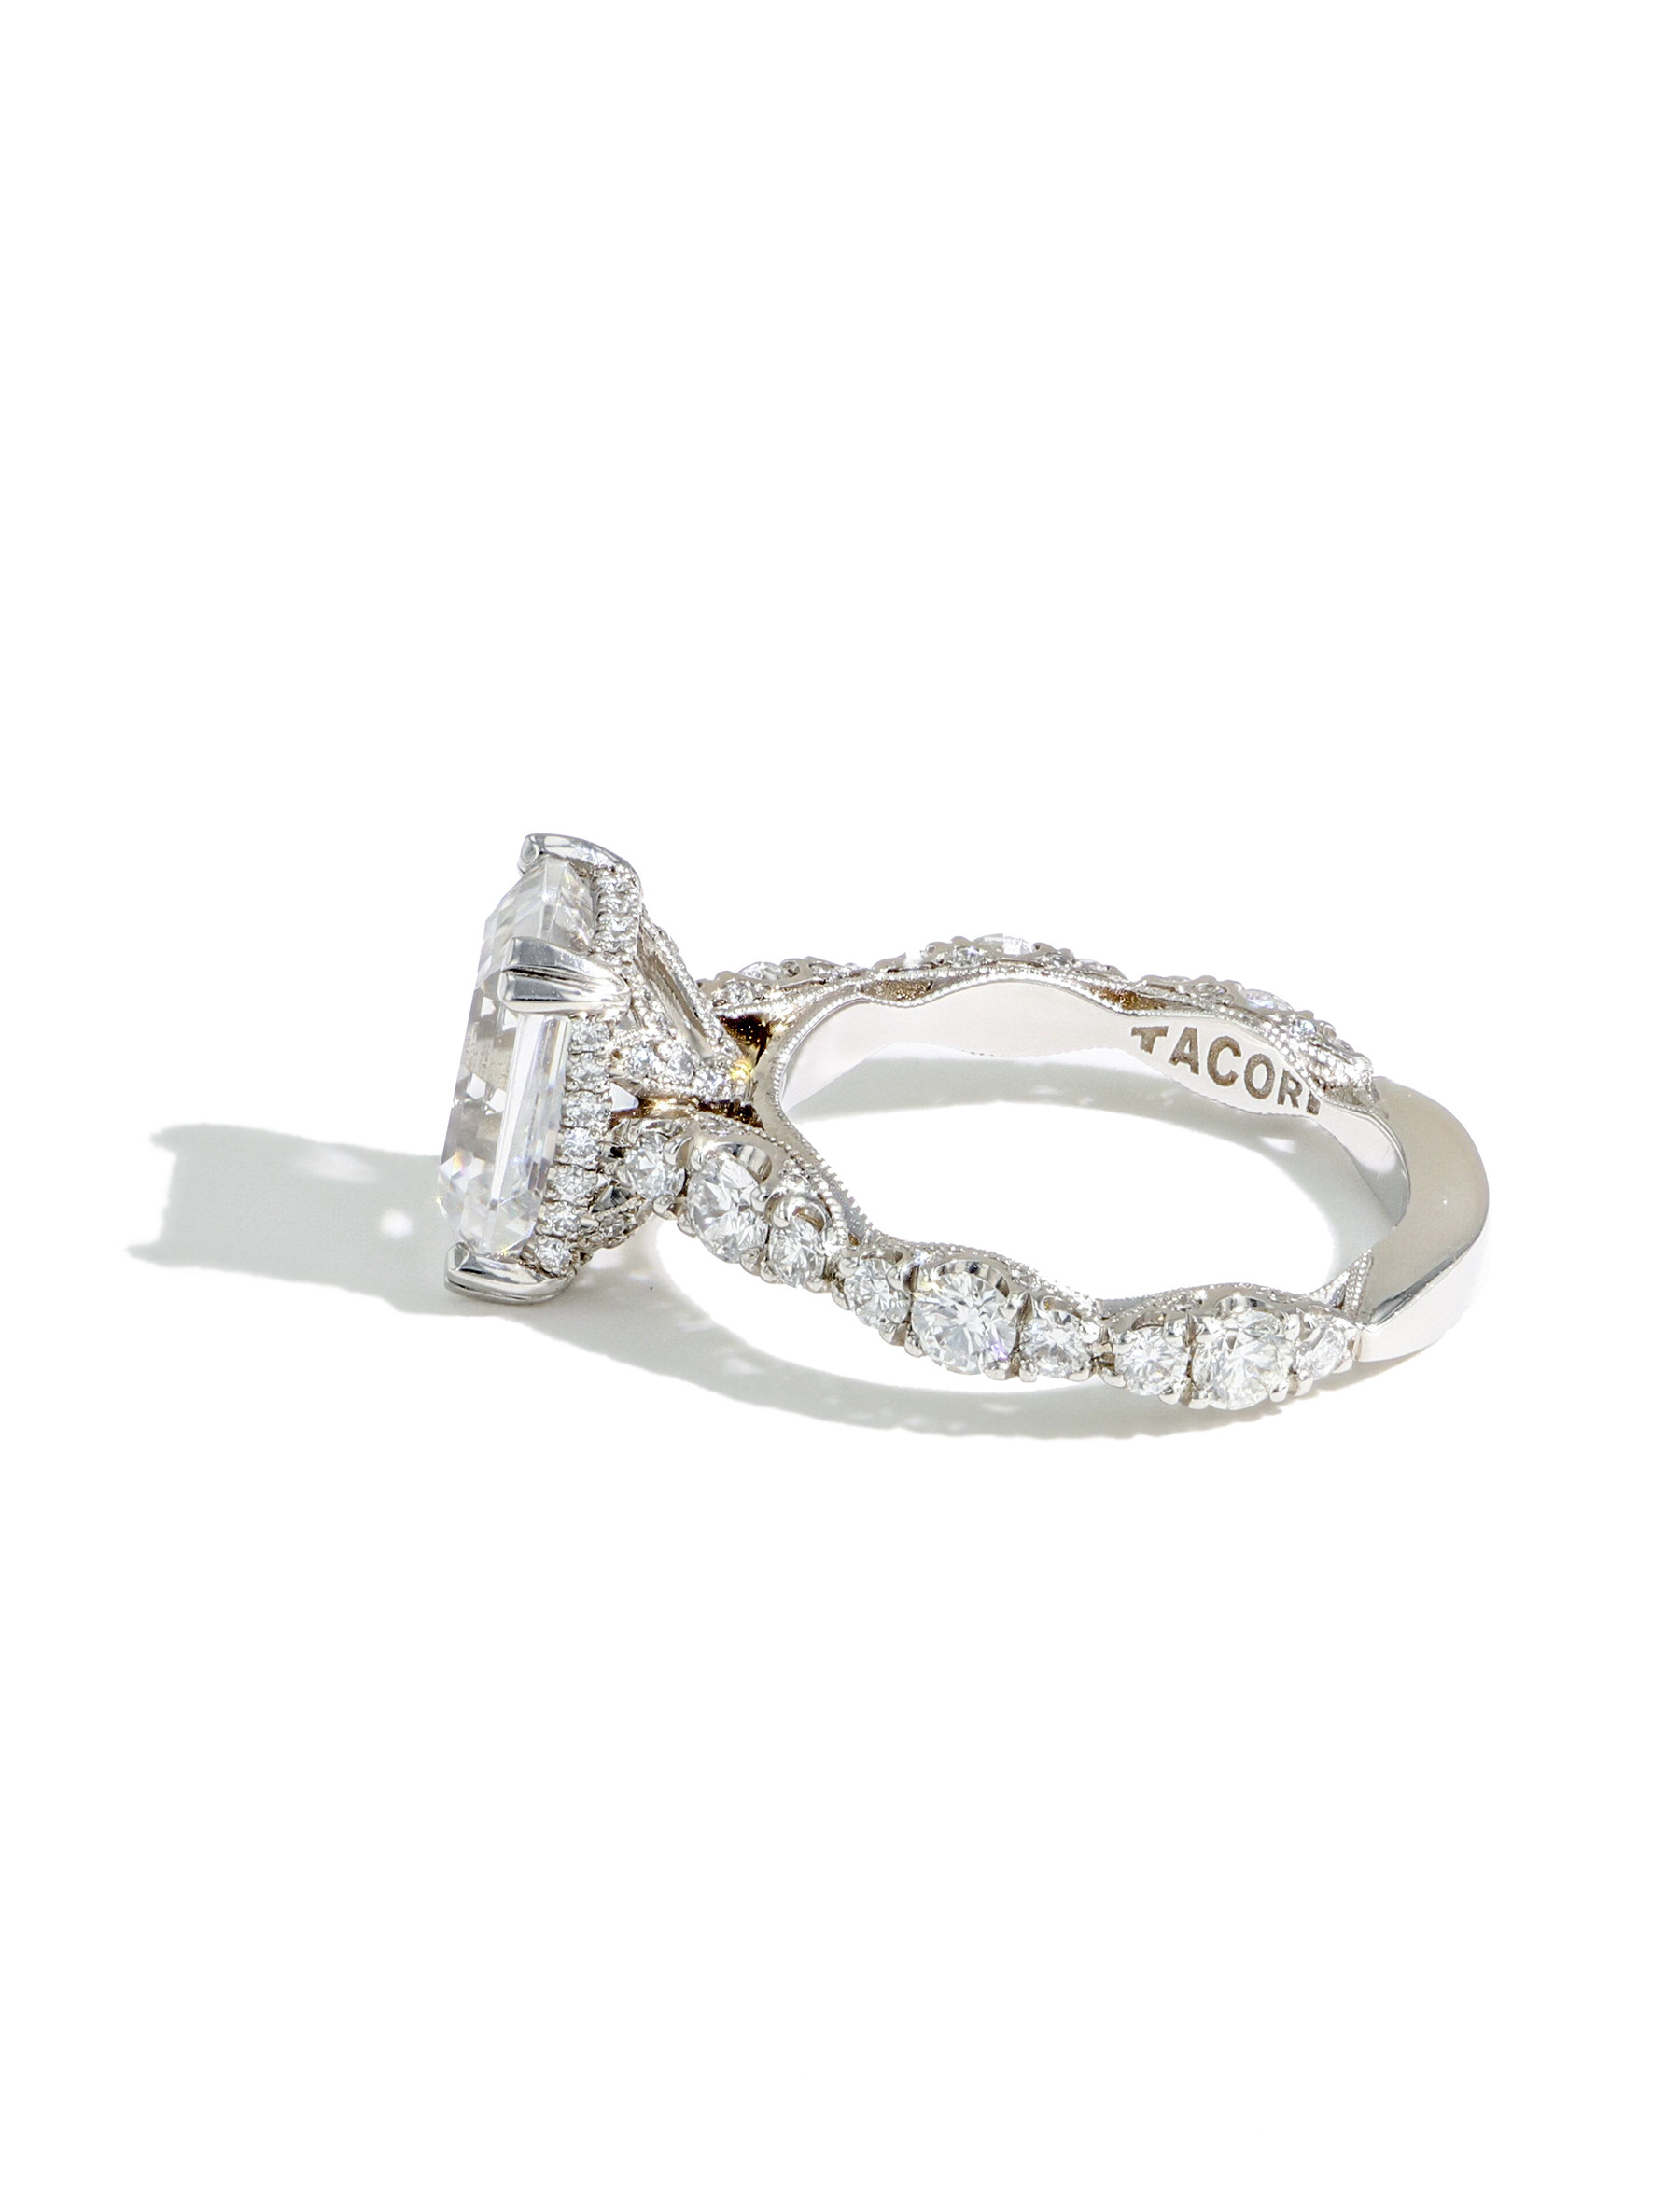 Tacori Royal T Emerald Pave Diamond Engagement Ring Setting side view